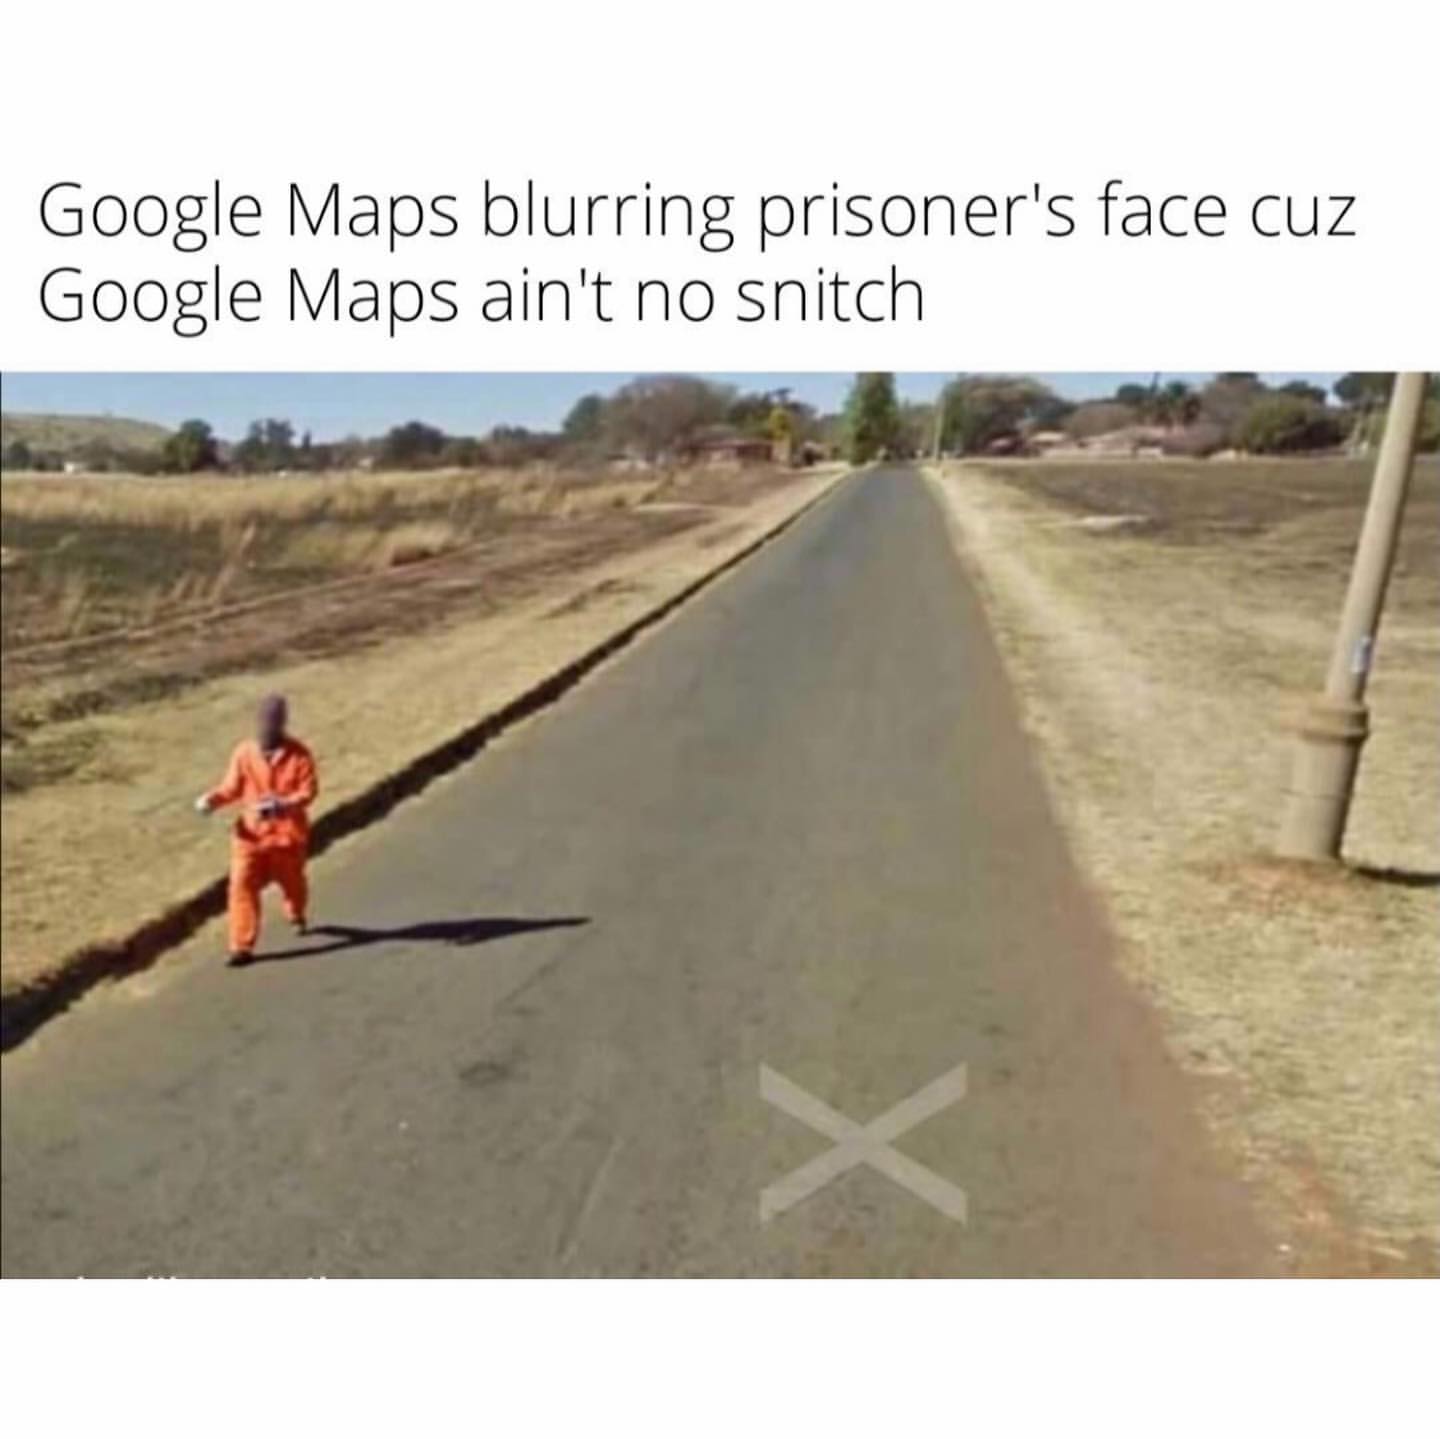 Google Maps blurring prisoner's face cuz Google Maps ain't no snitch.